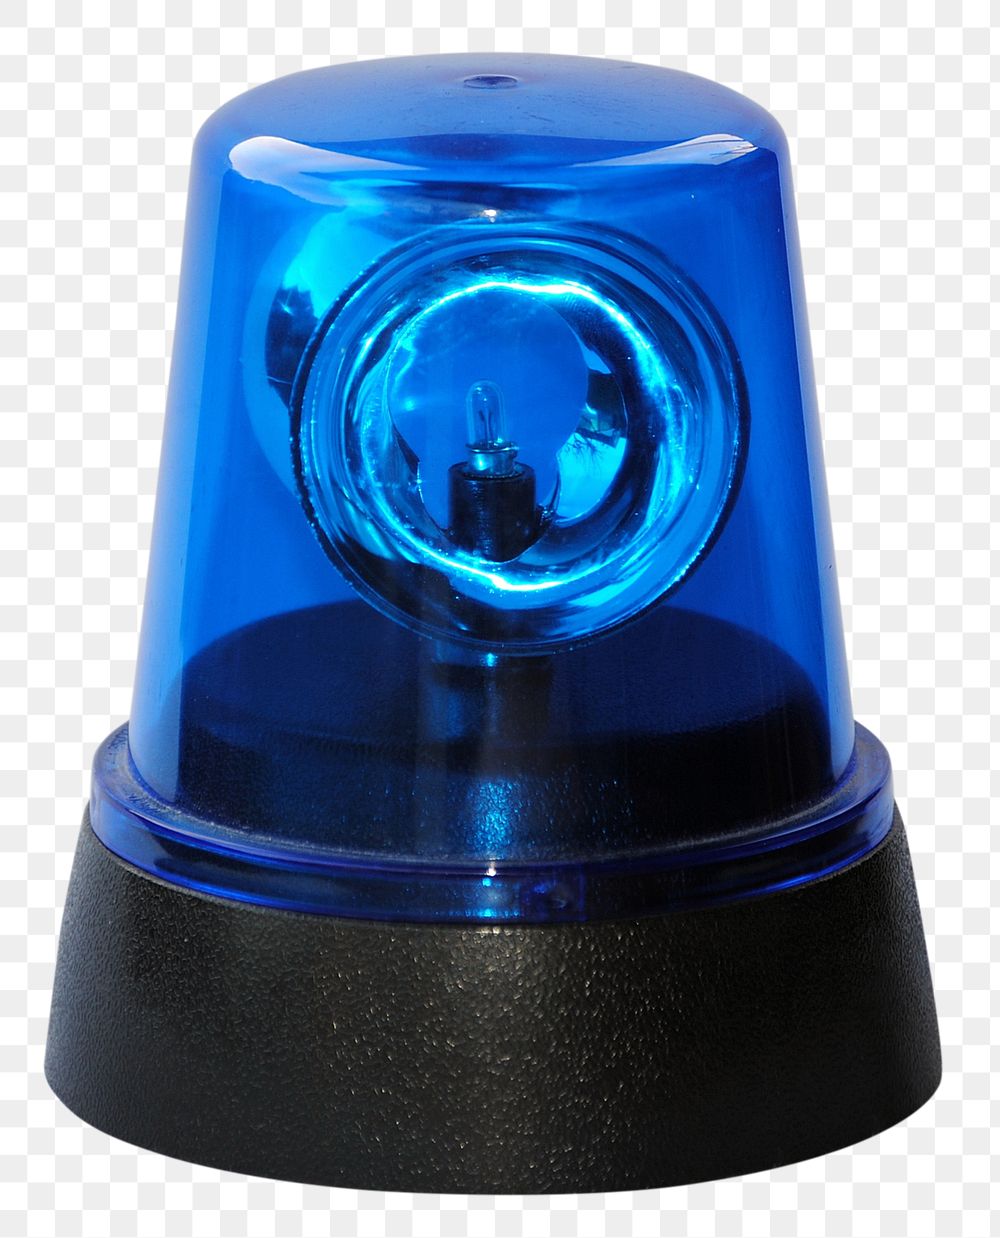 Blue siren png light sticker, emergency flash, transparent background